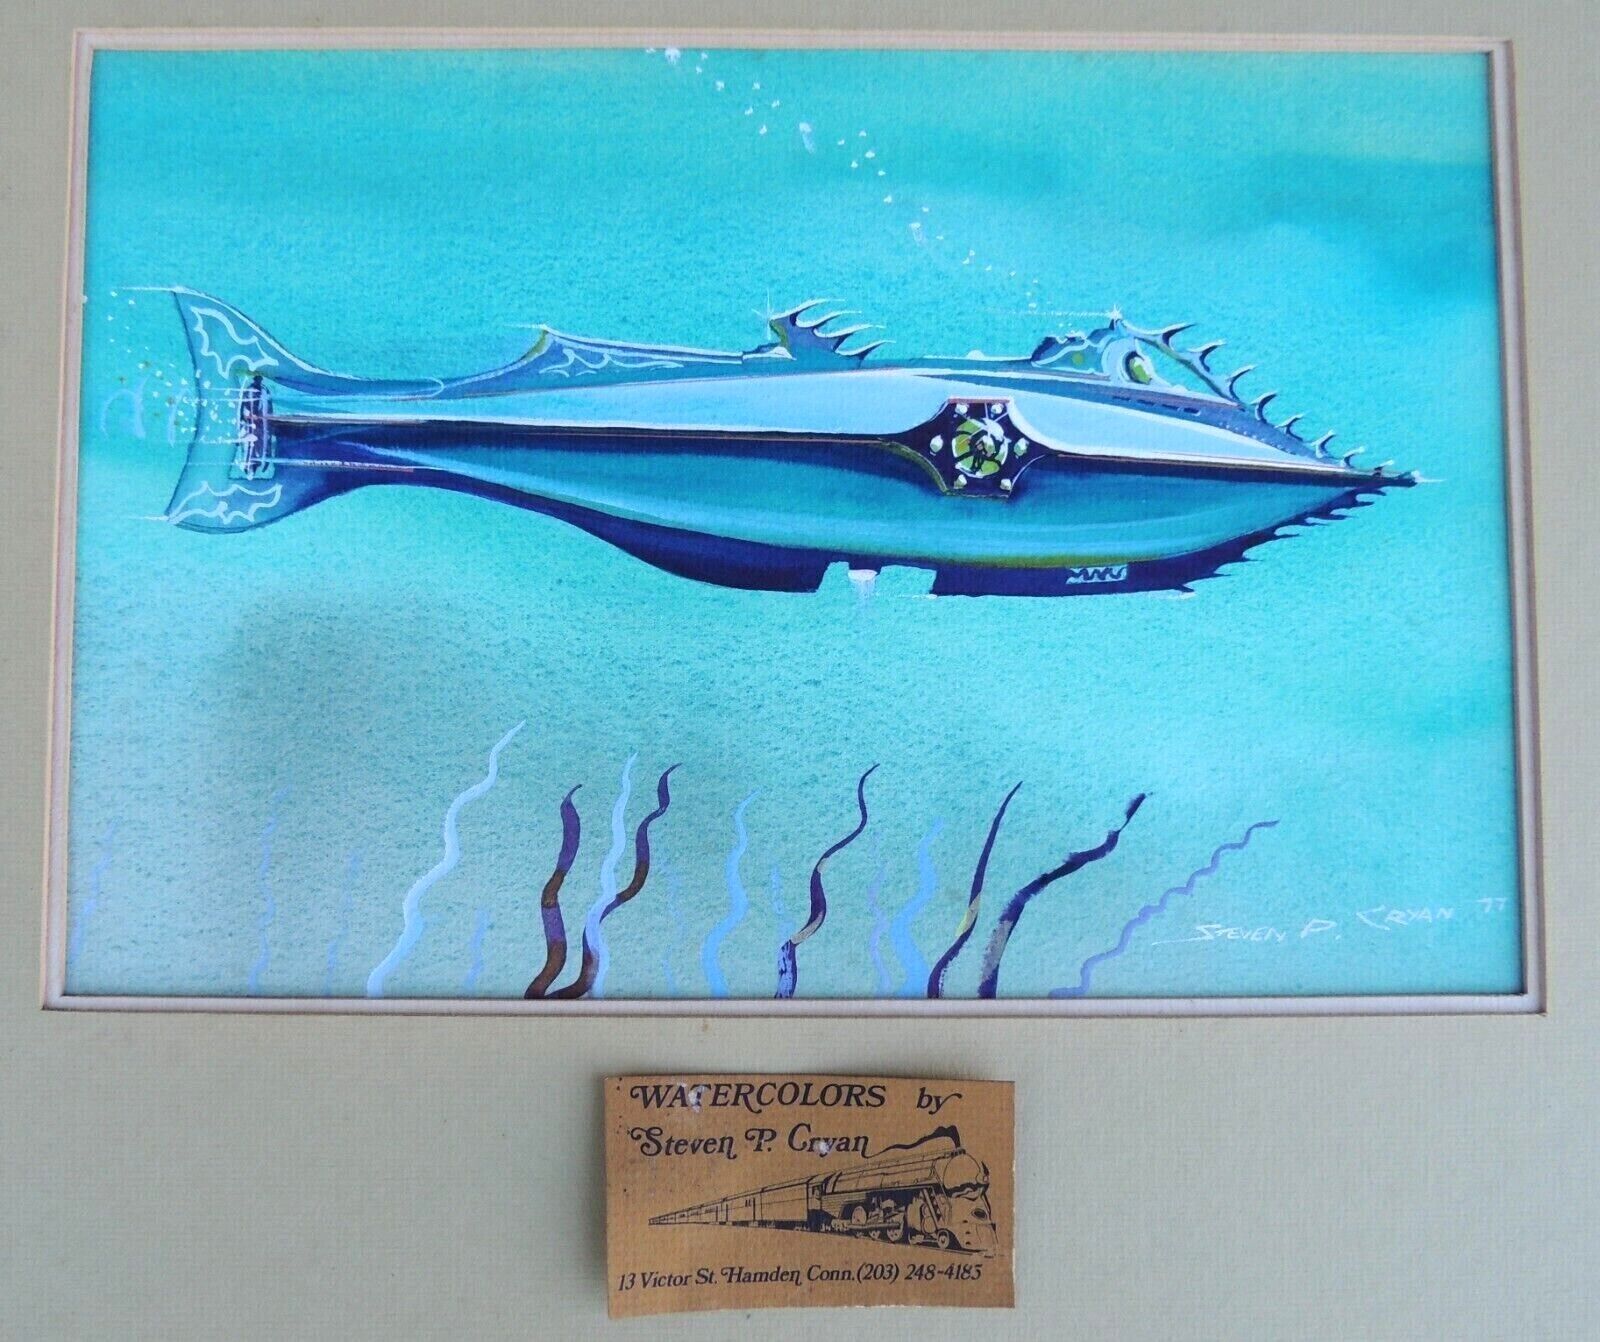 Walt Disney Nautilus Submarine 20000 Leagues under the Sea Original Watercolor